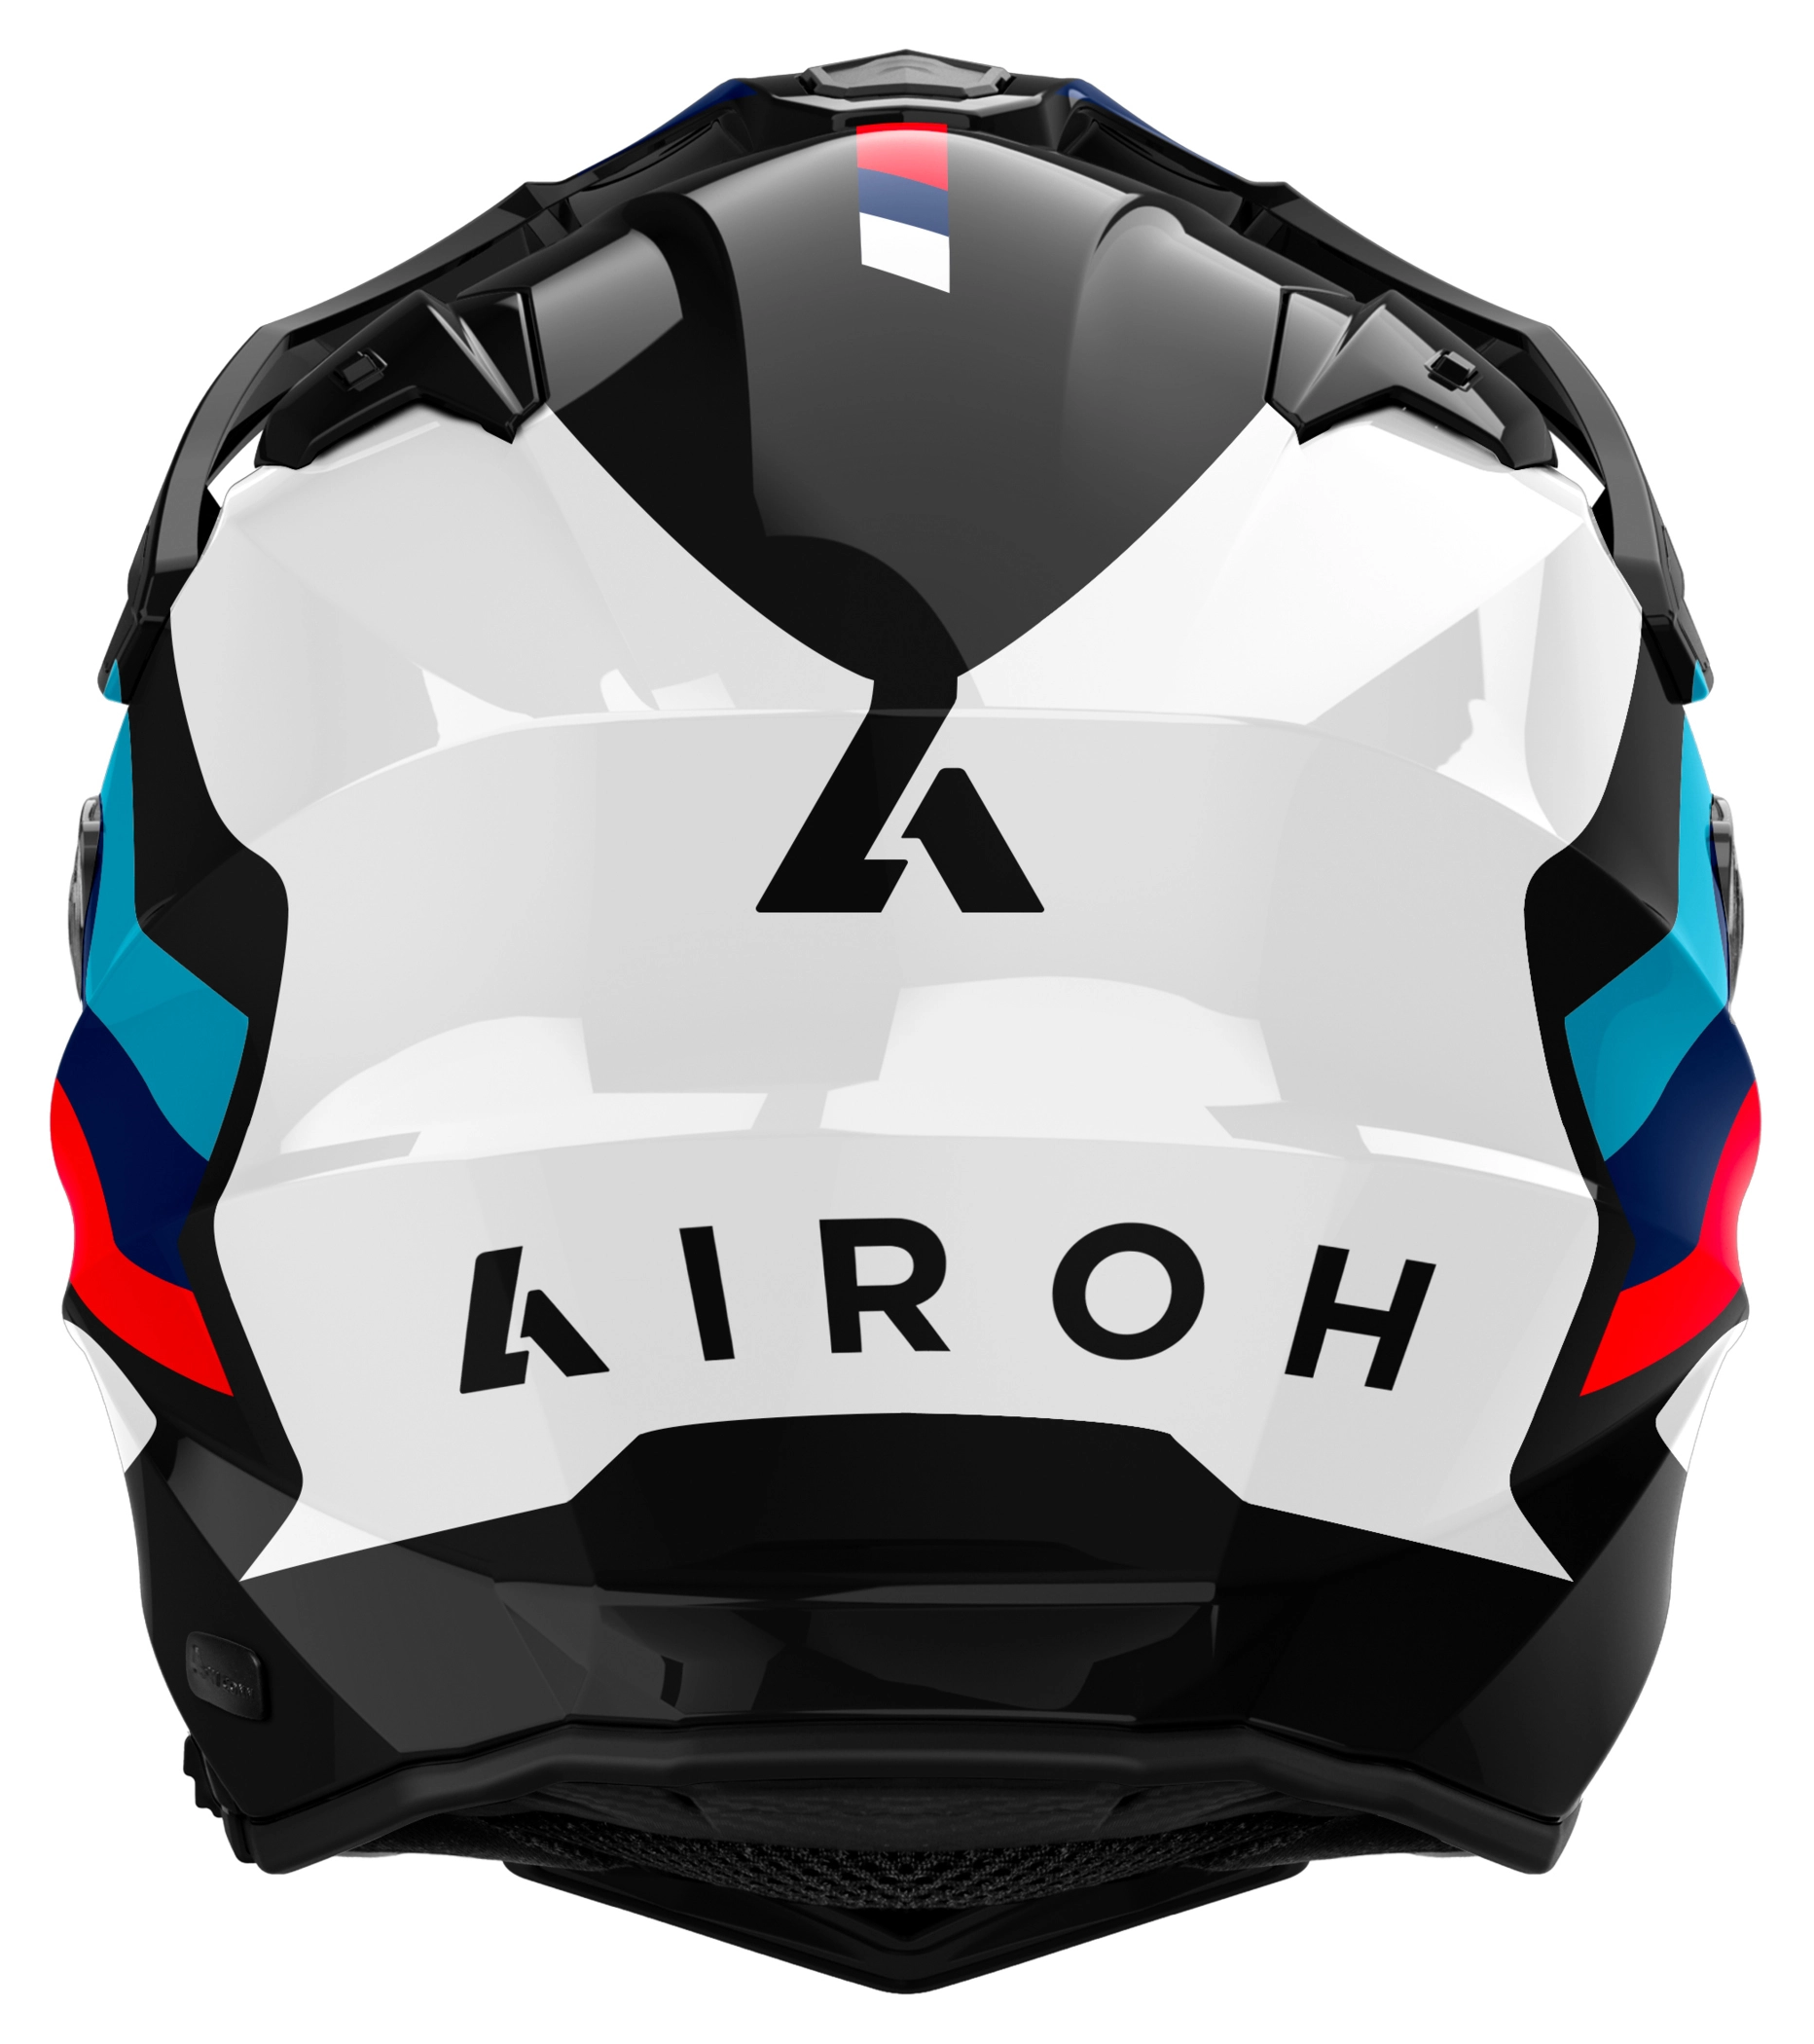 Helmet Airoh Commander 2 Reveal Blue at the best price